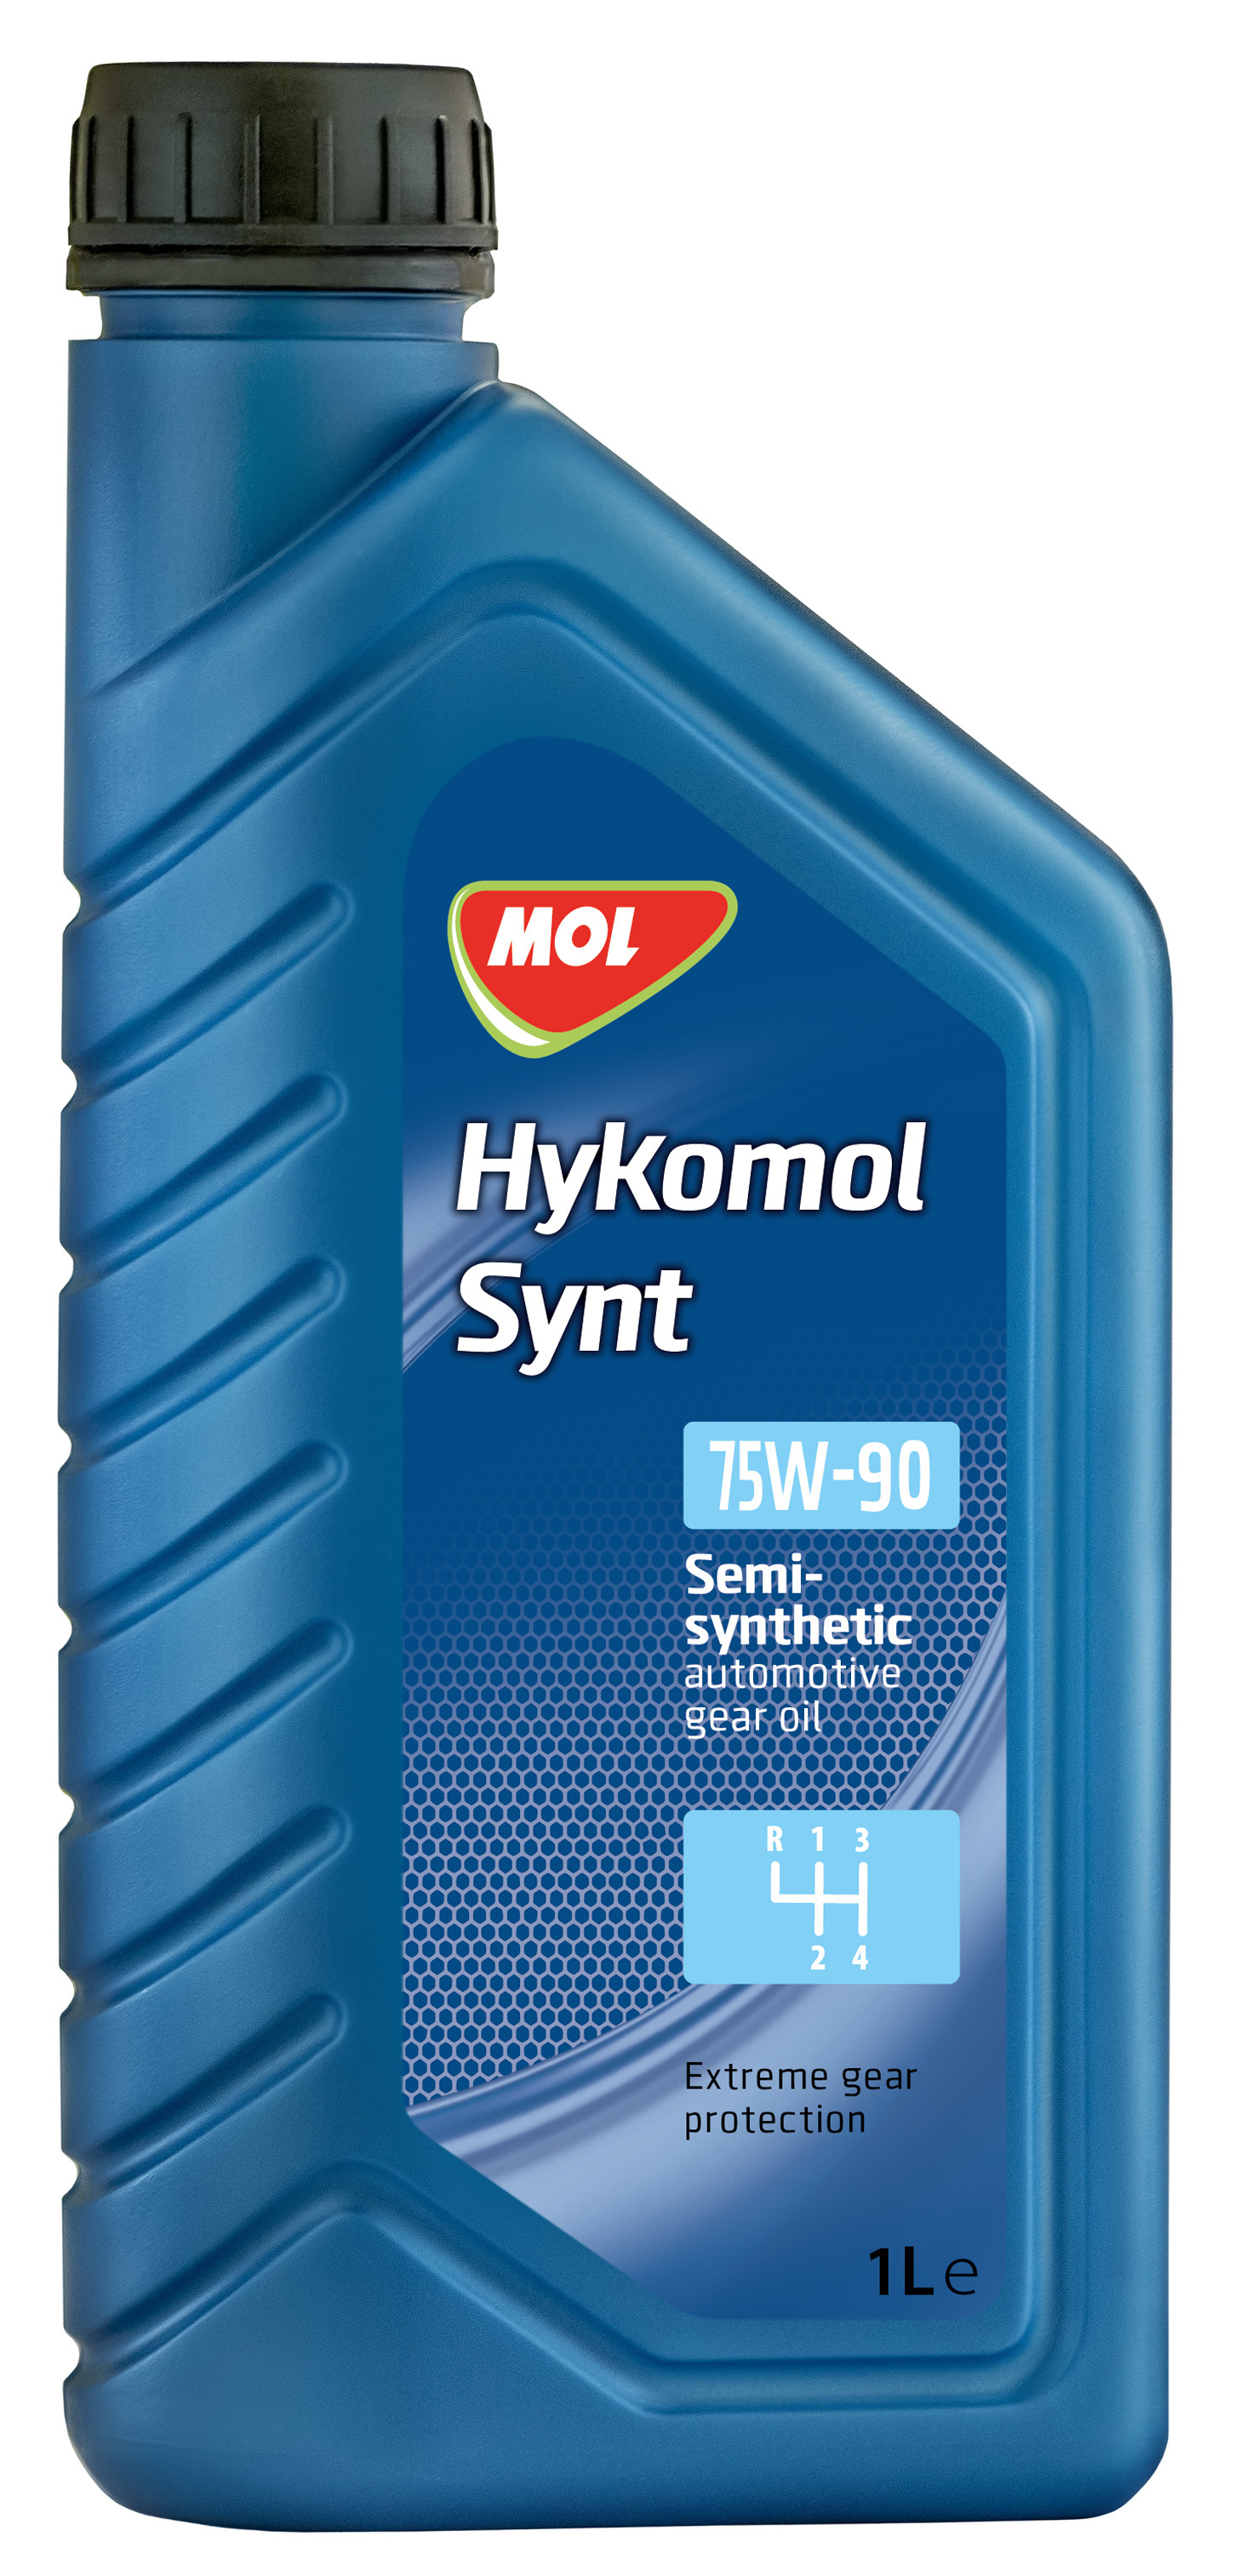 Atf iii g. Mol ATF 3g 1l. Hykomol 80w90 масло. Hykomol k80w90. Трансмиссионное масло 80w-90 Геартекс.